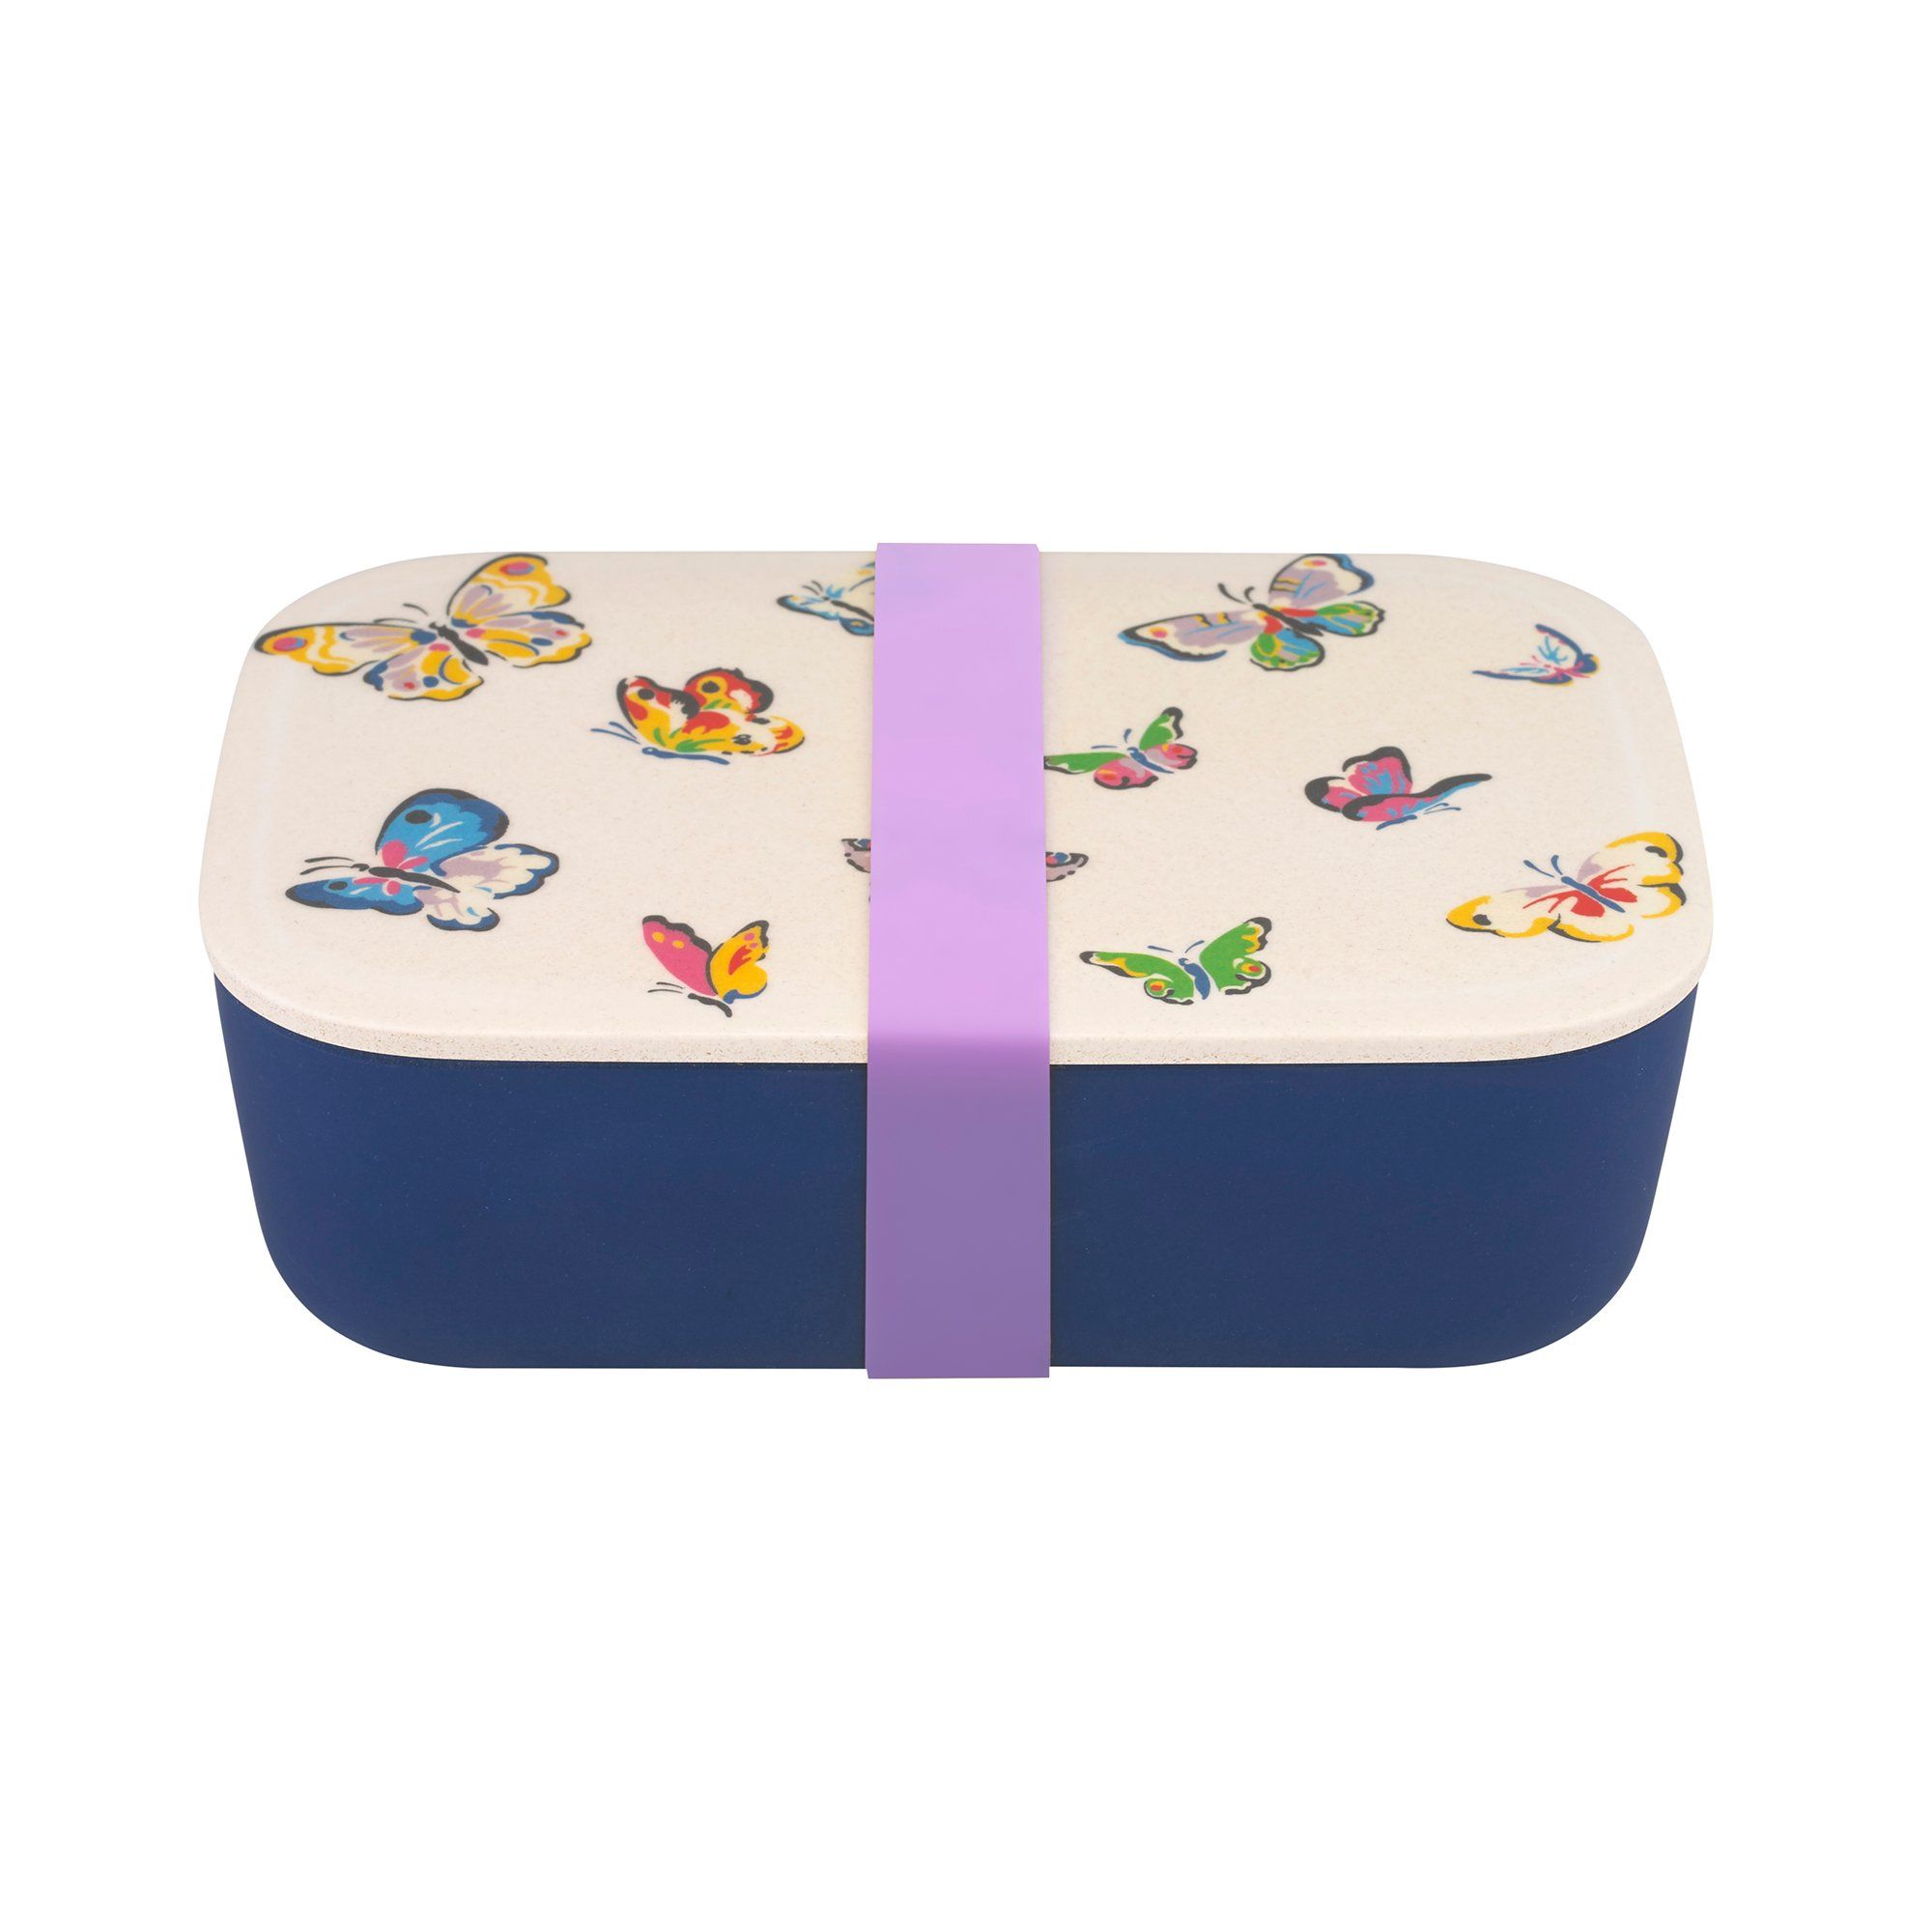  Hộp đựng thức ăn/Lunch Box - Butterflies - Cream 